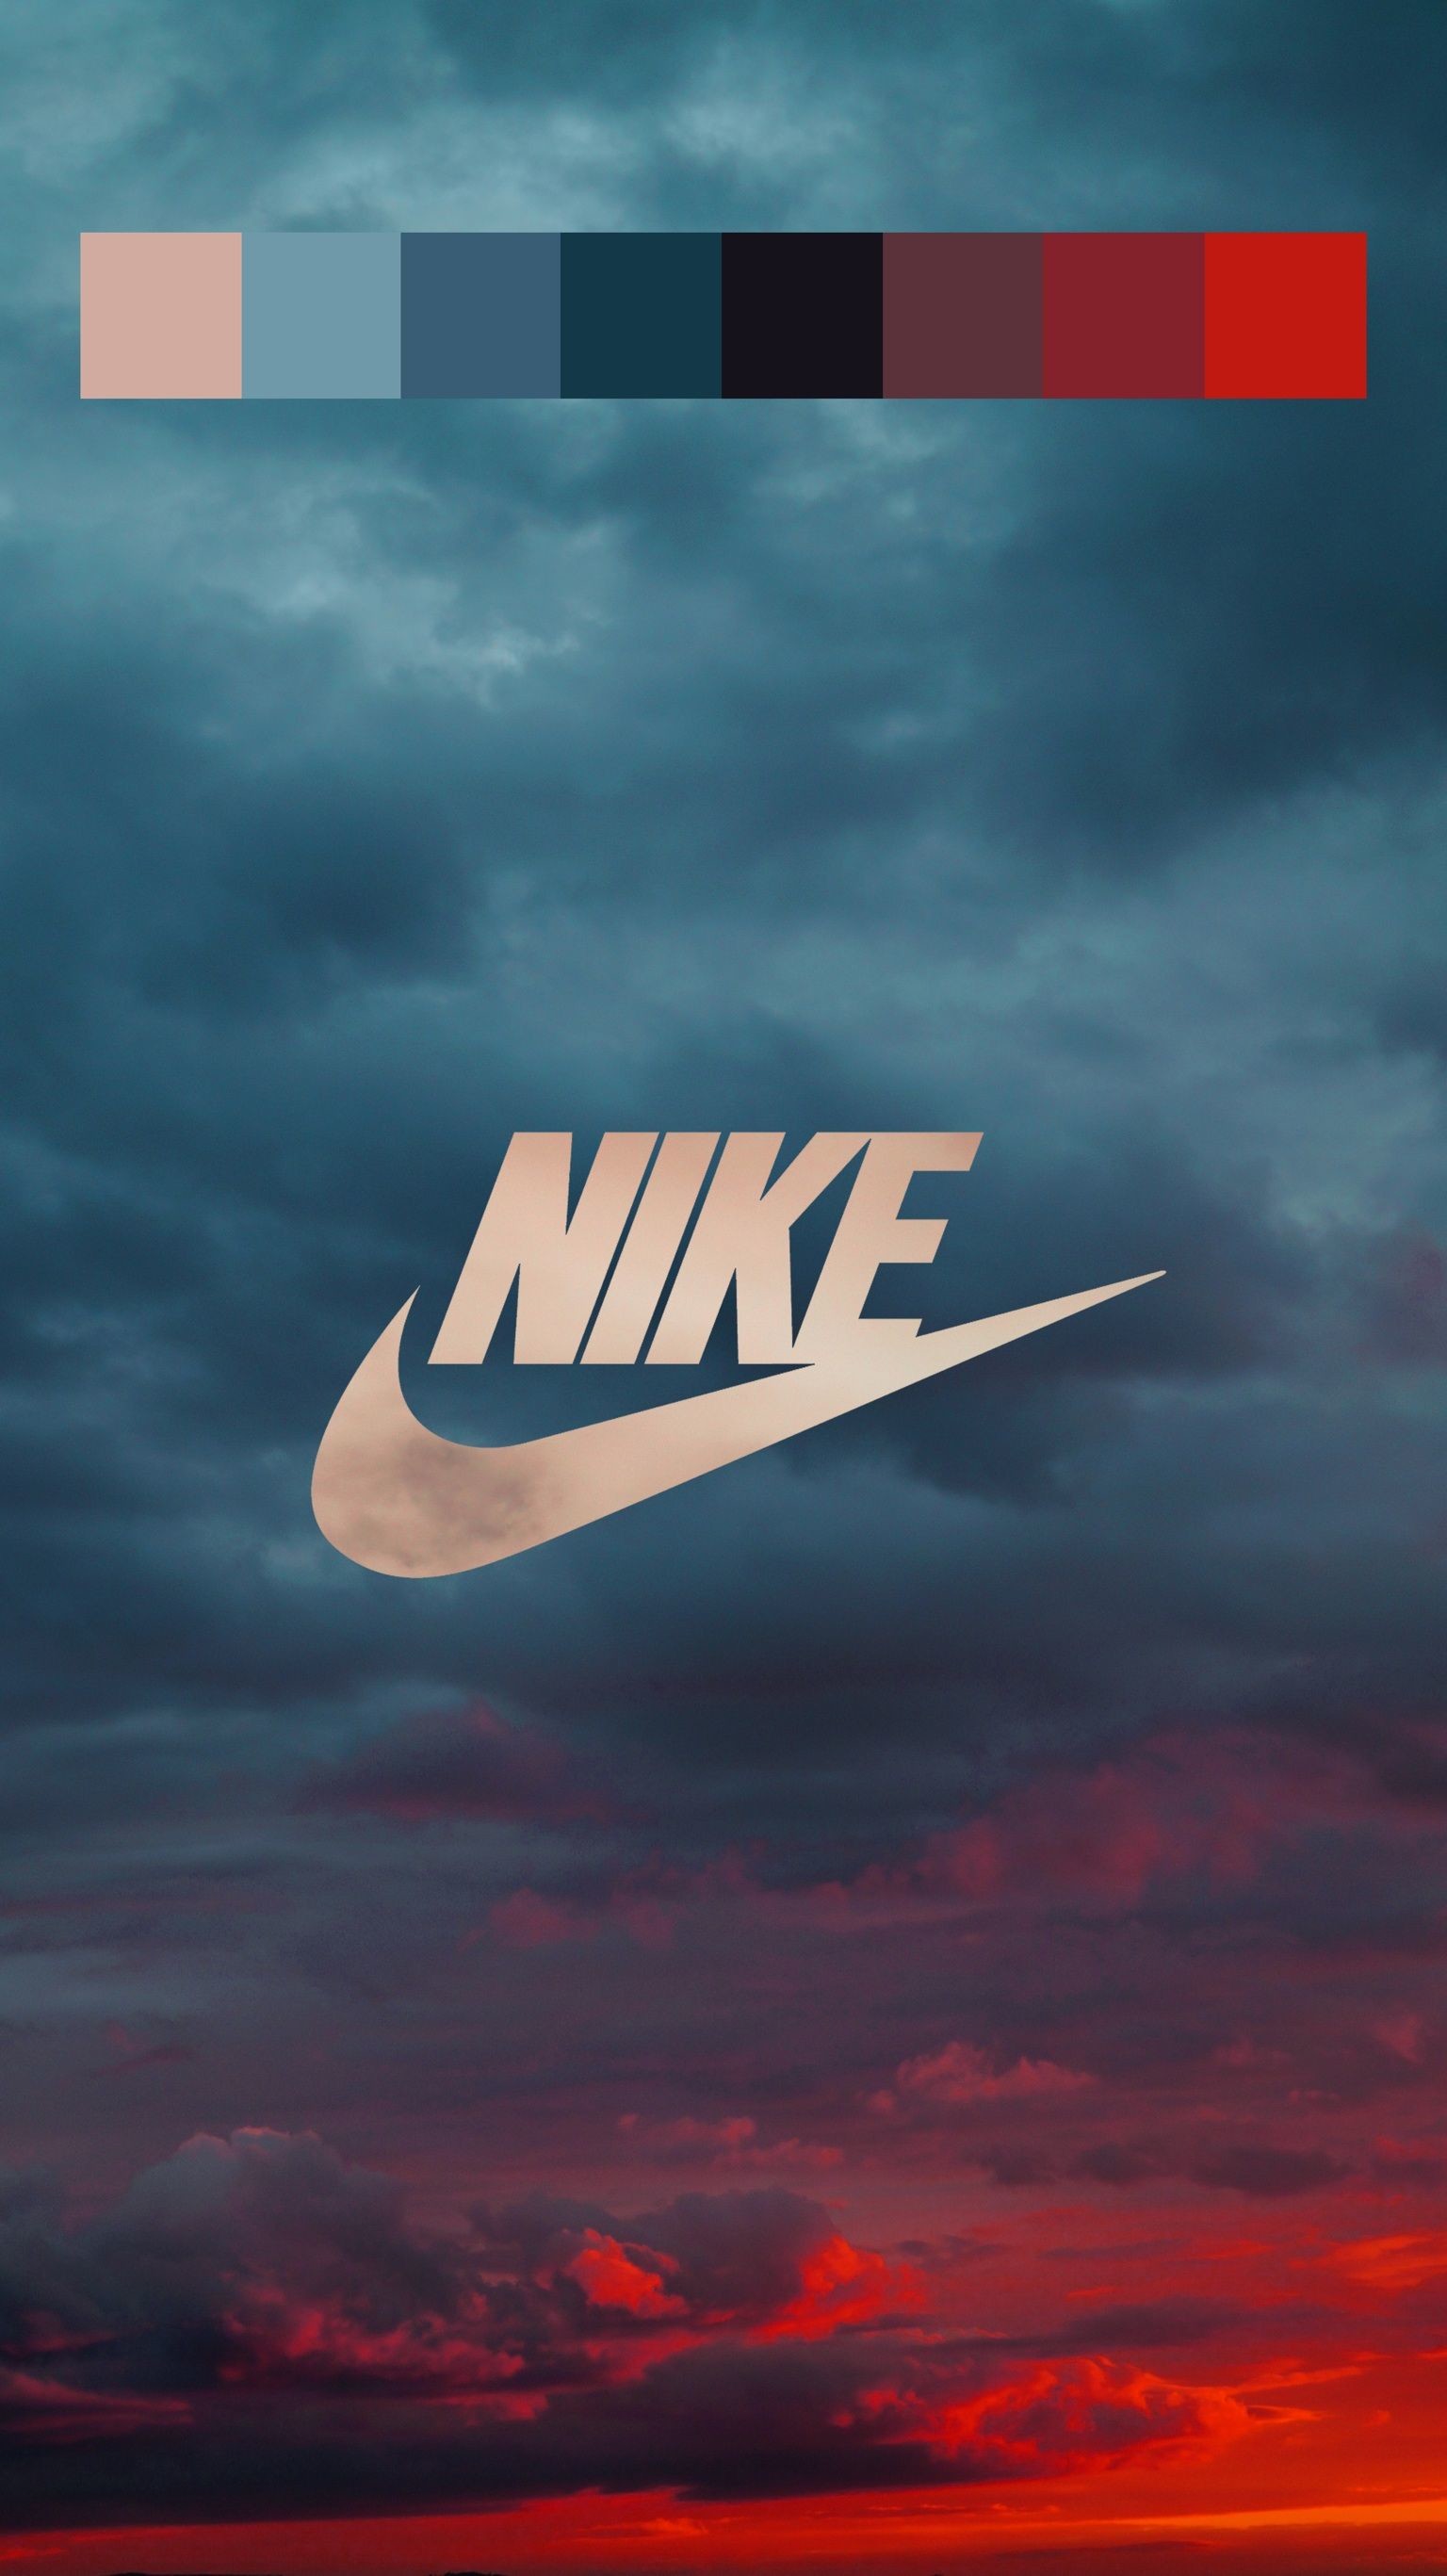 Обои на айфон найк. Обои Nike. Найк логотип. Картинки найк. Nike заставка.